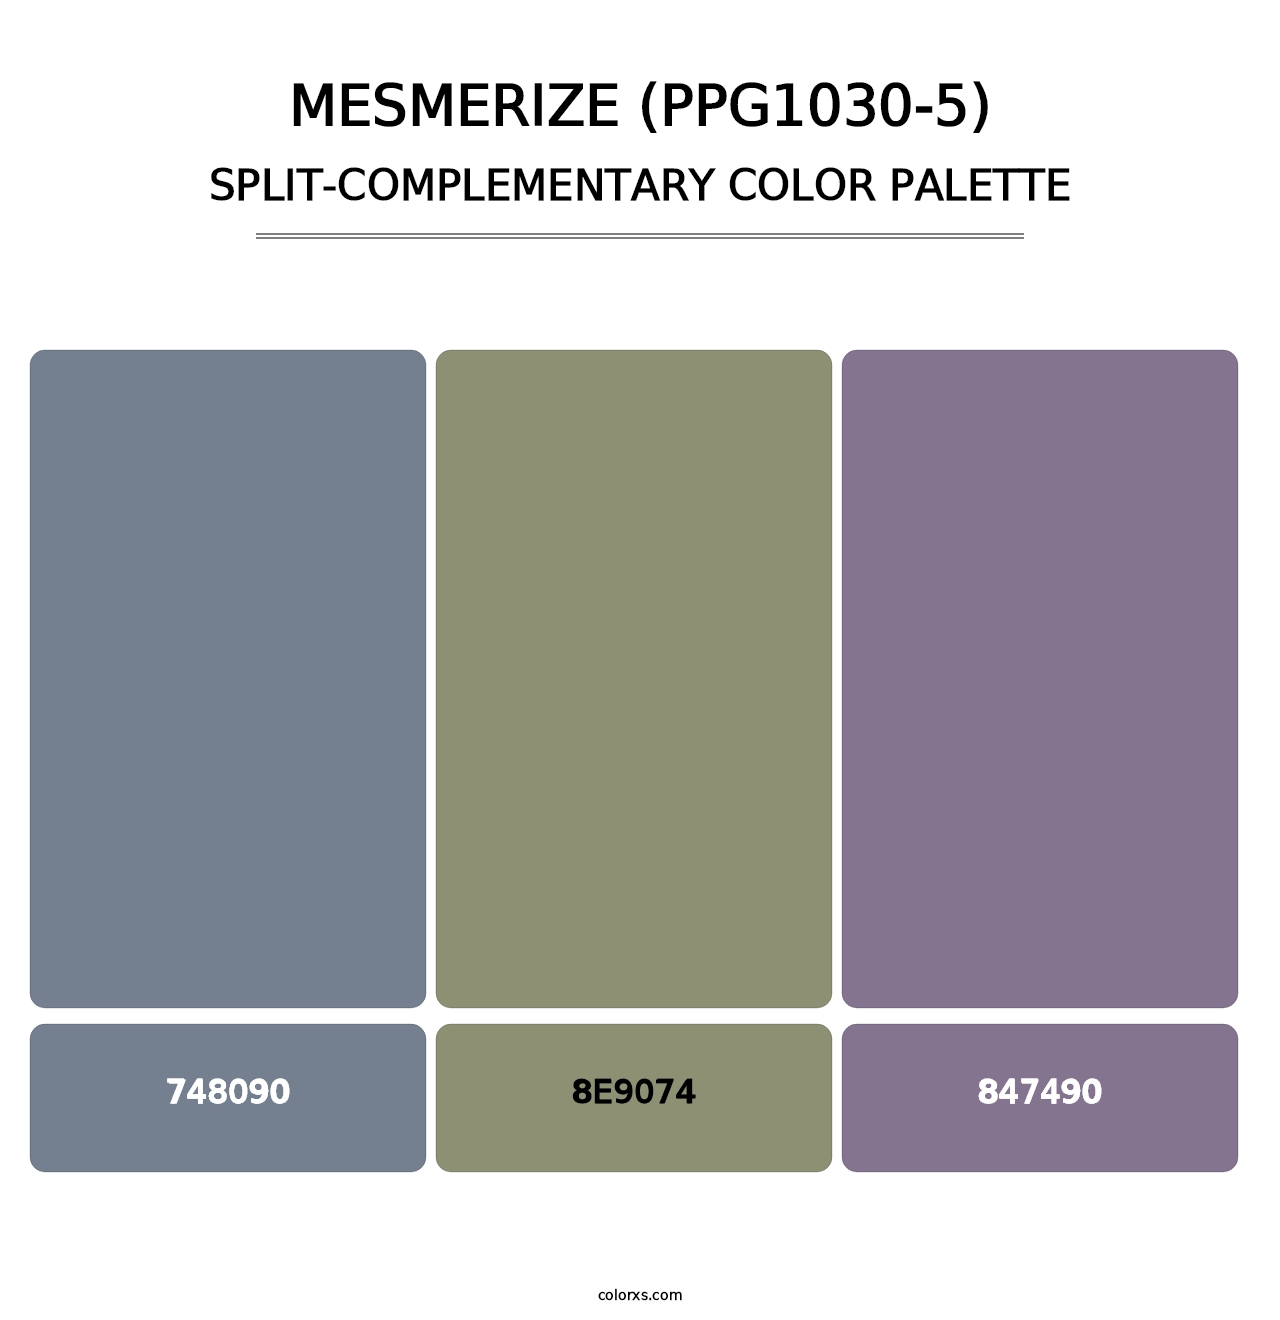 Mesmerize (PPG1030-5) - Split-Complementary Color Palette